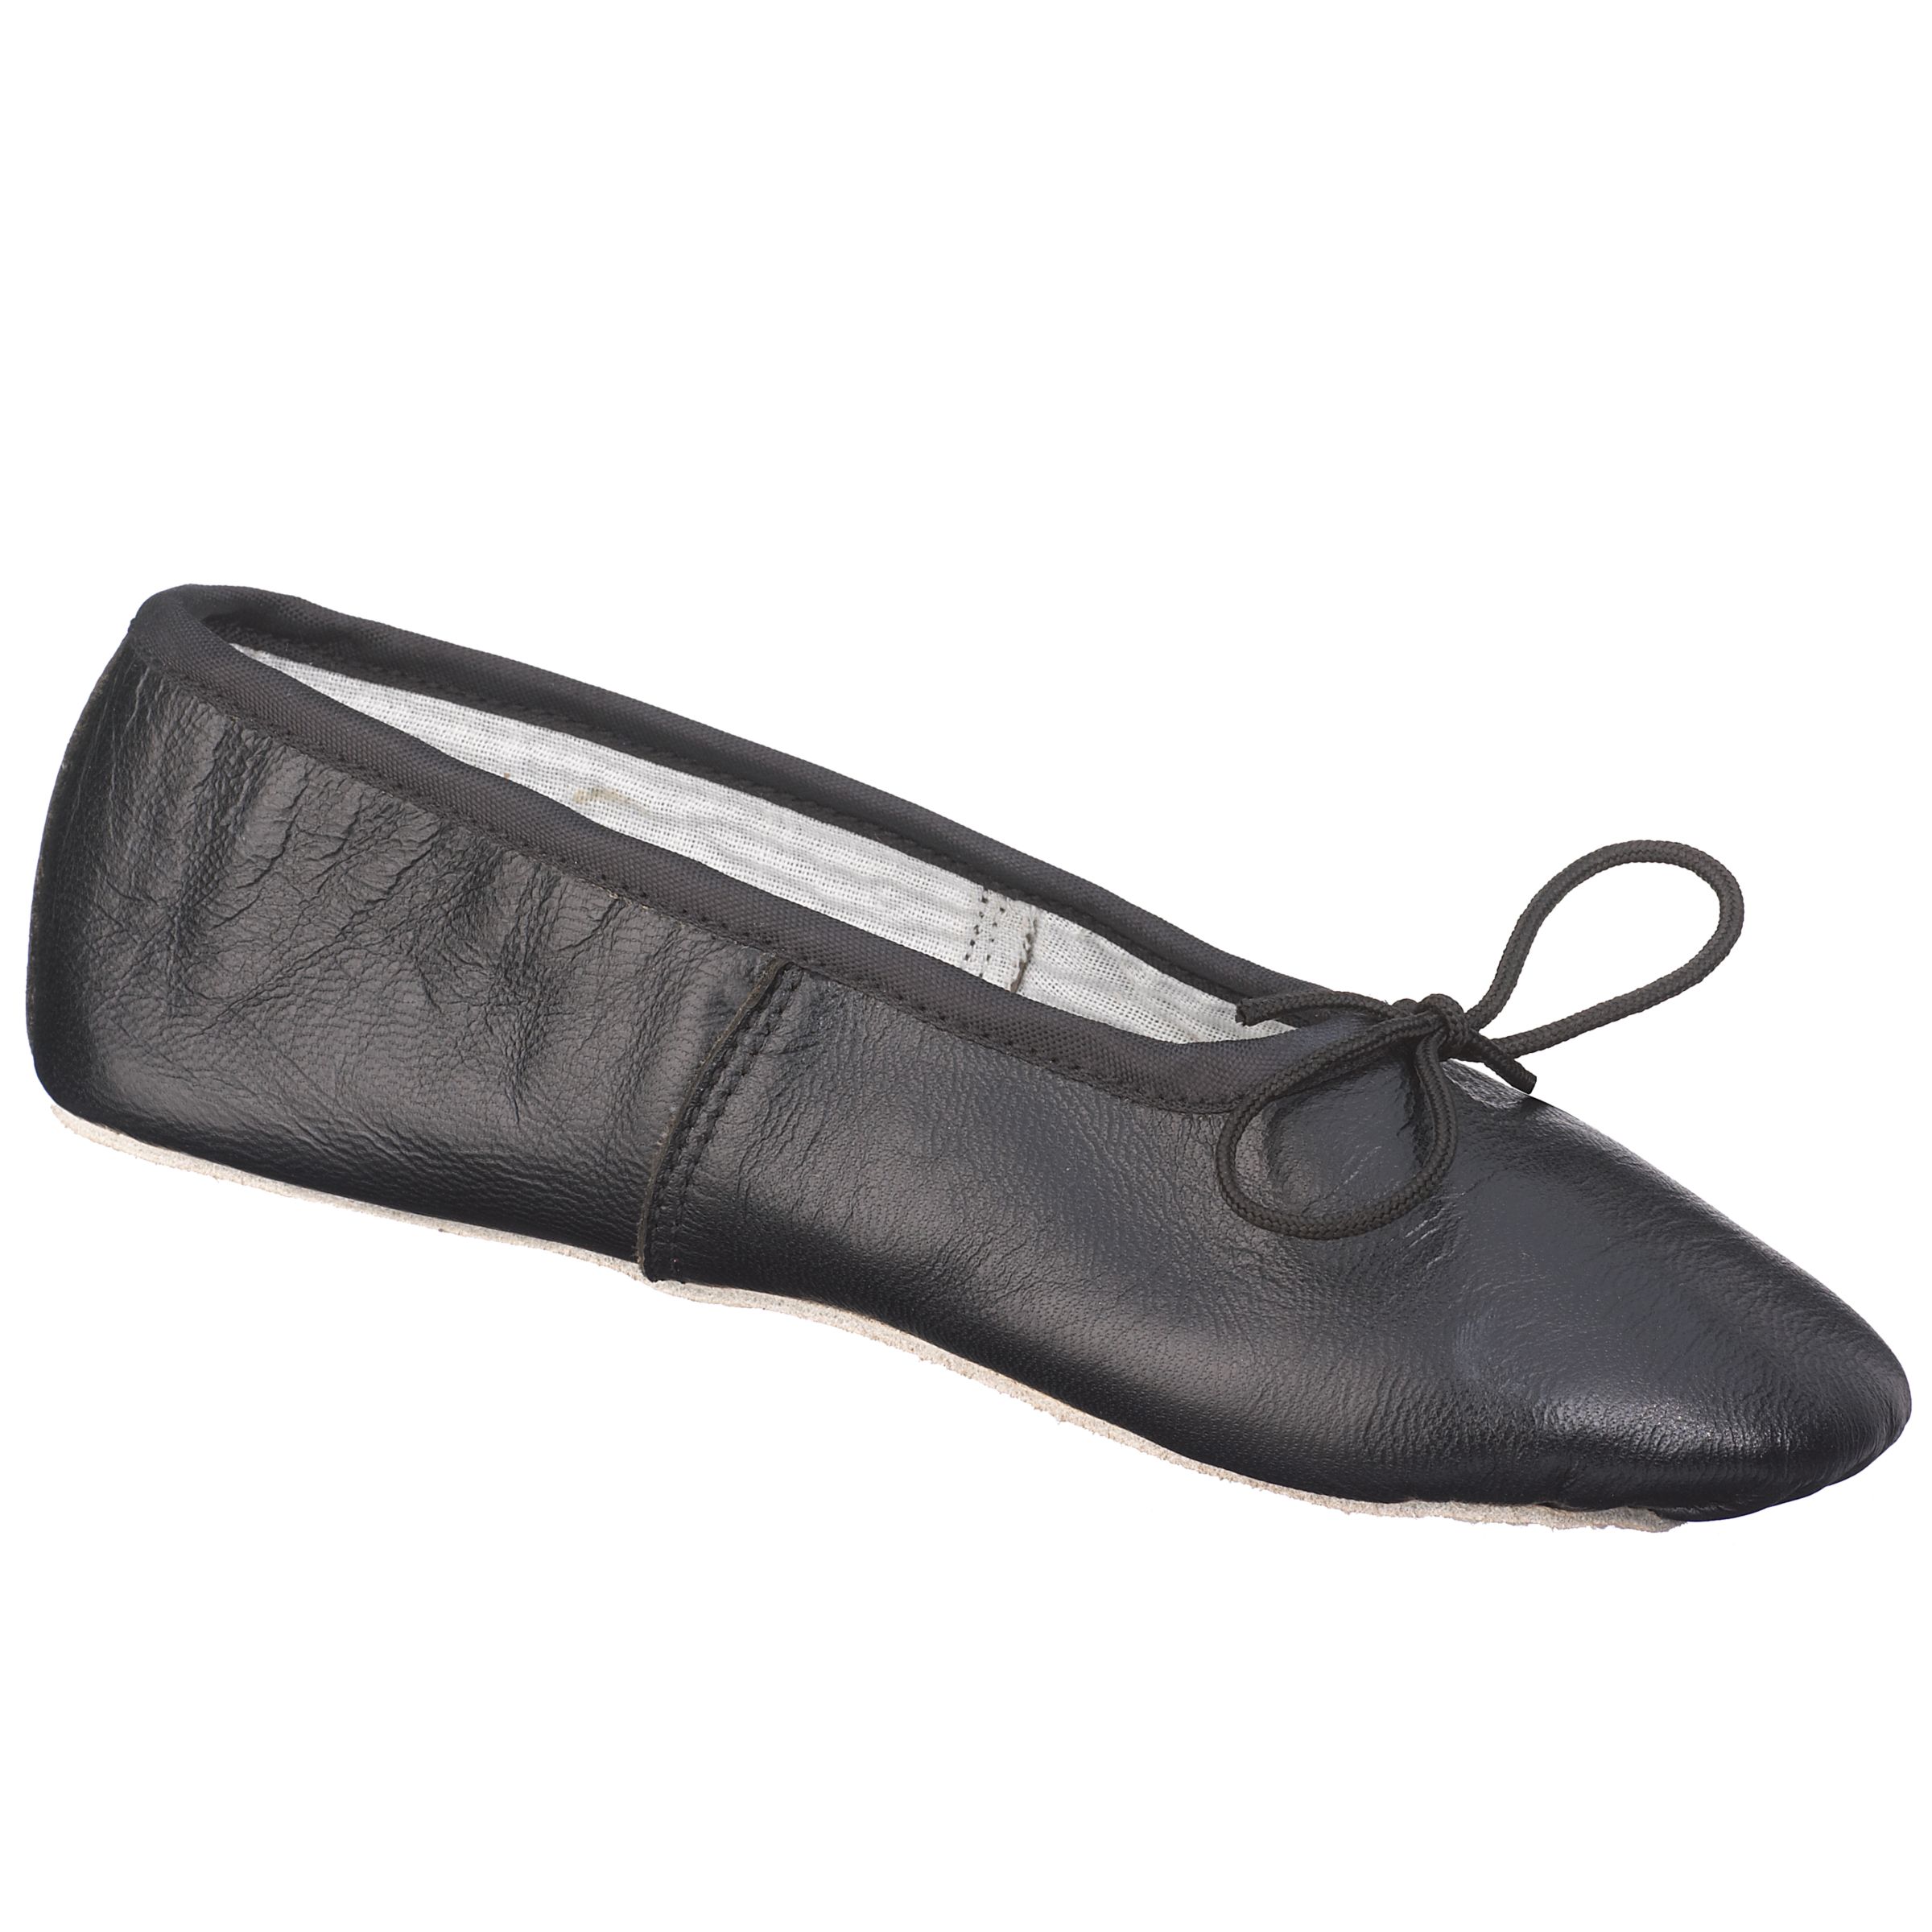 John Lewis Leather Ballet Shoes, Black